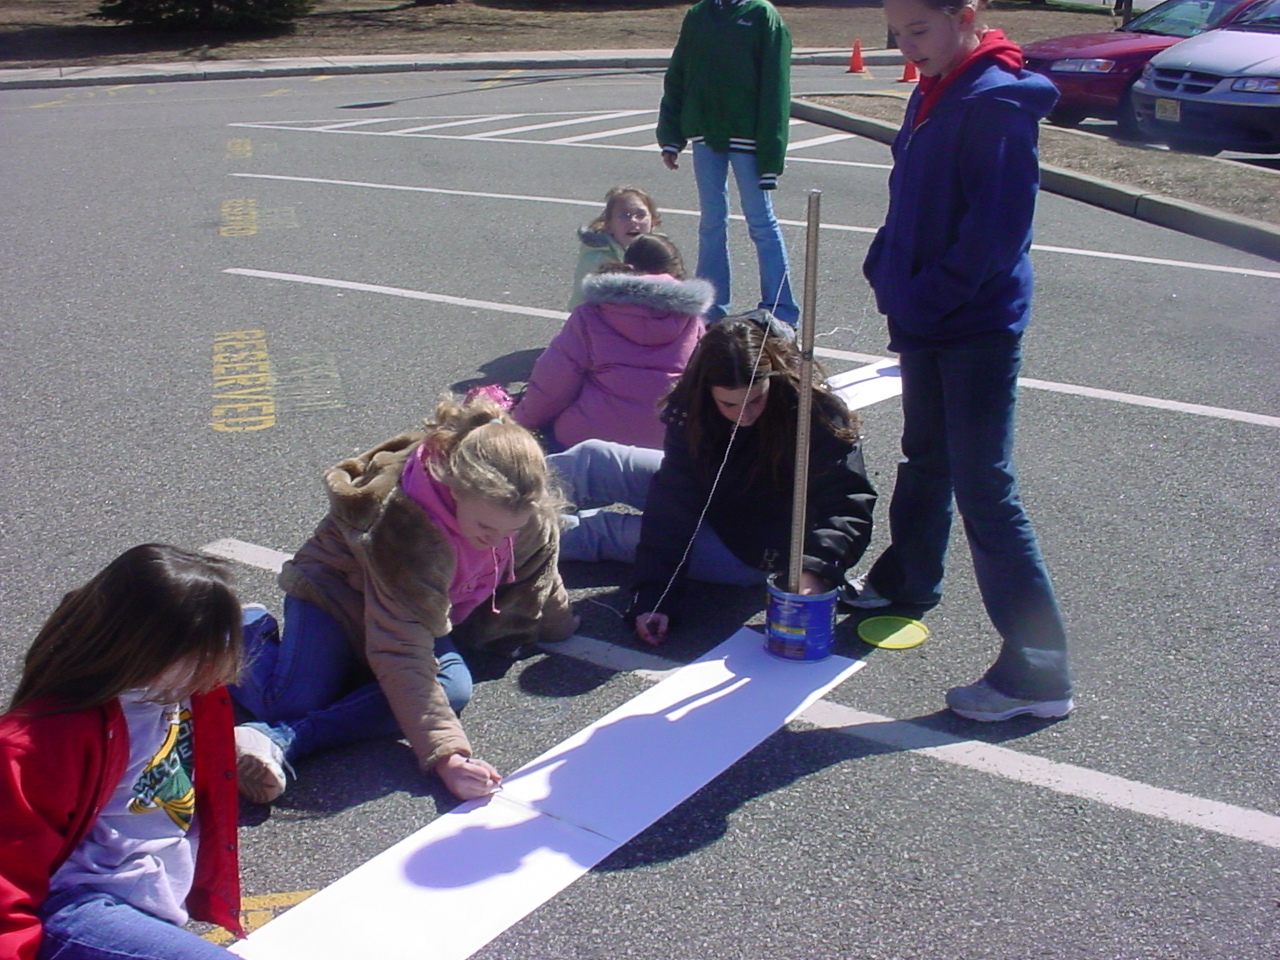 Girls making shadow measurements.